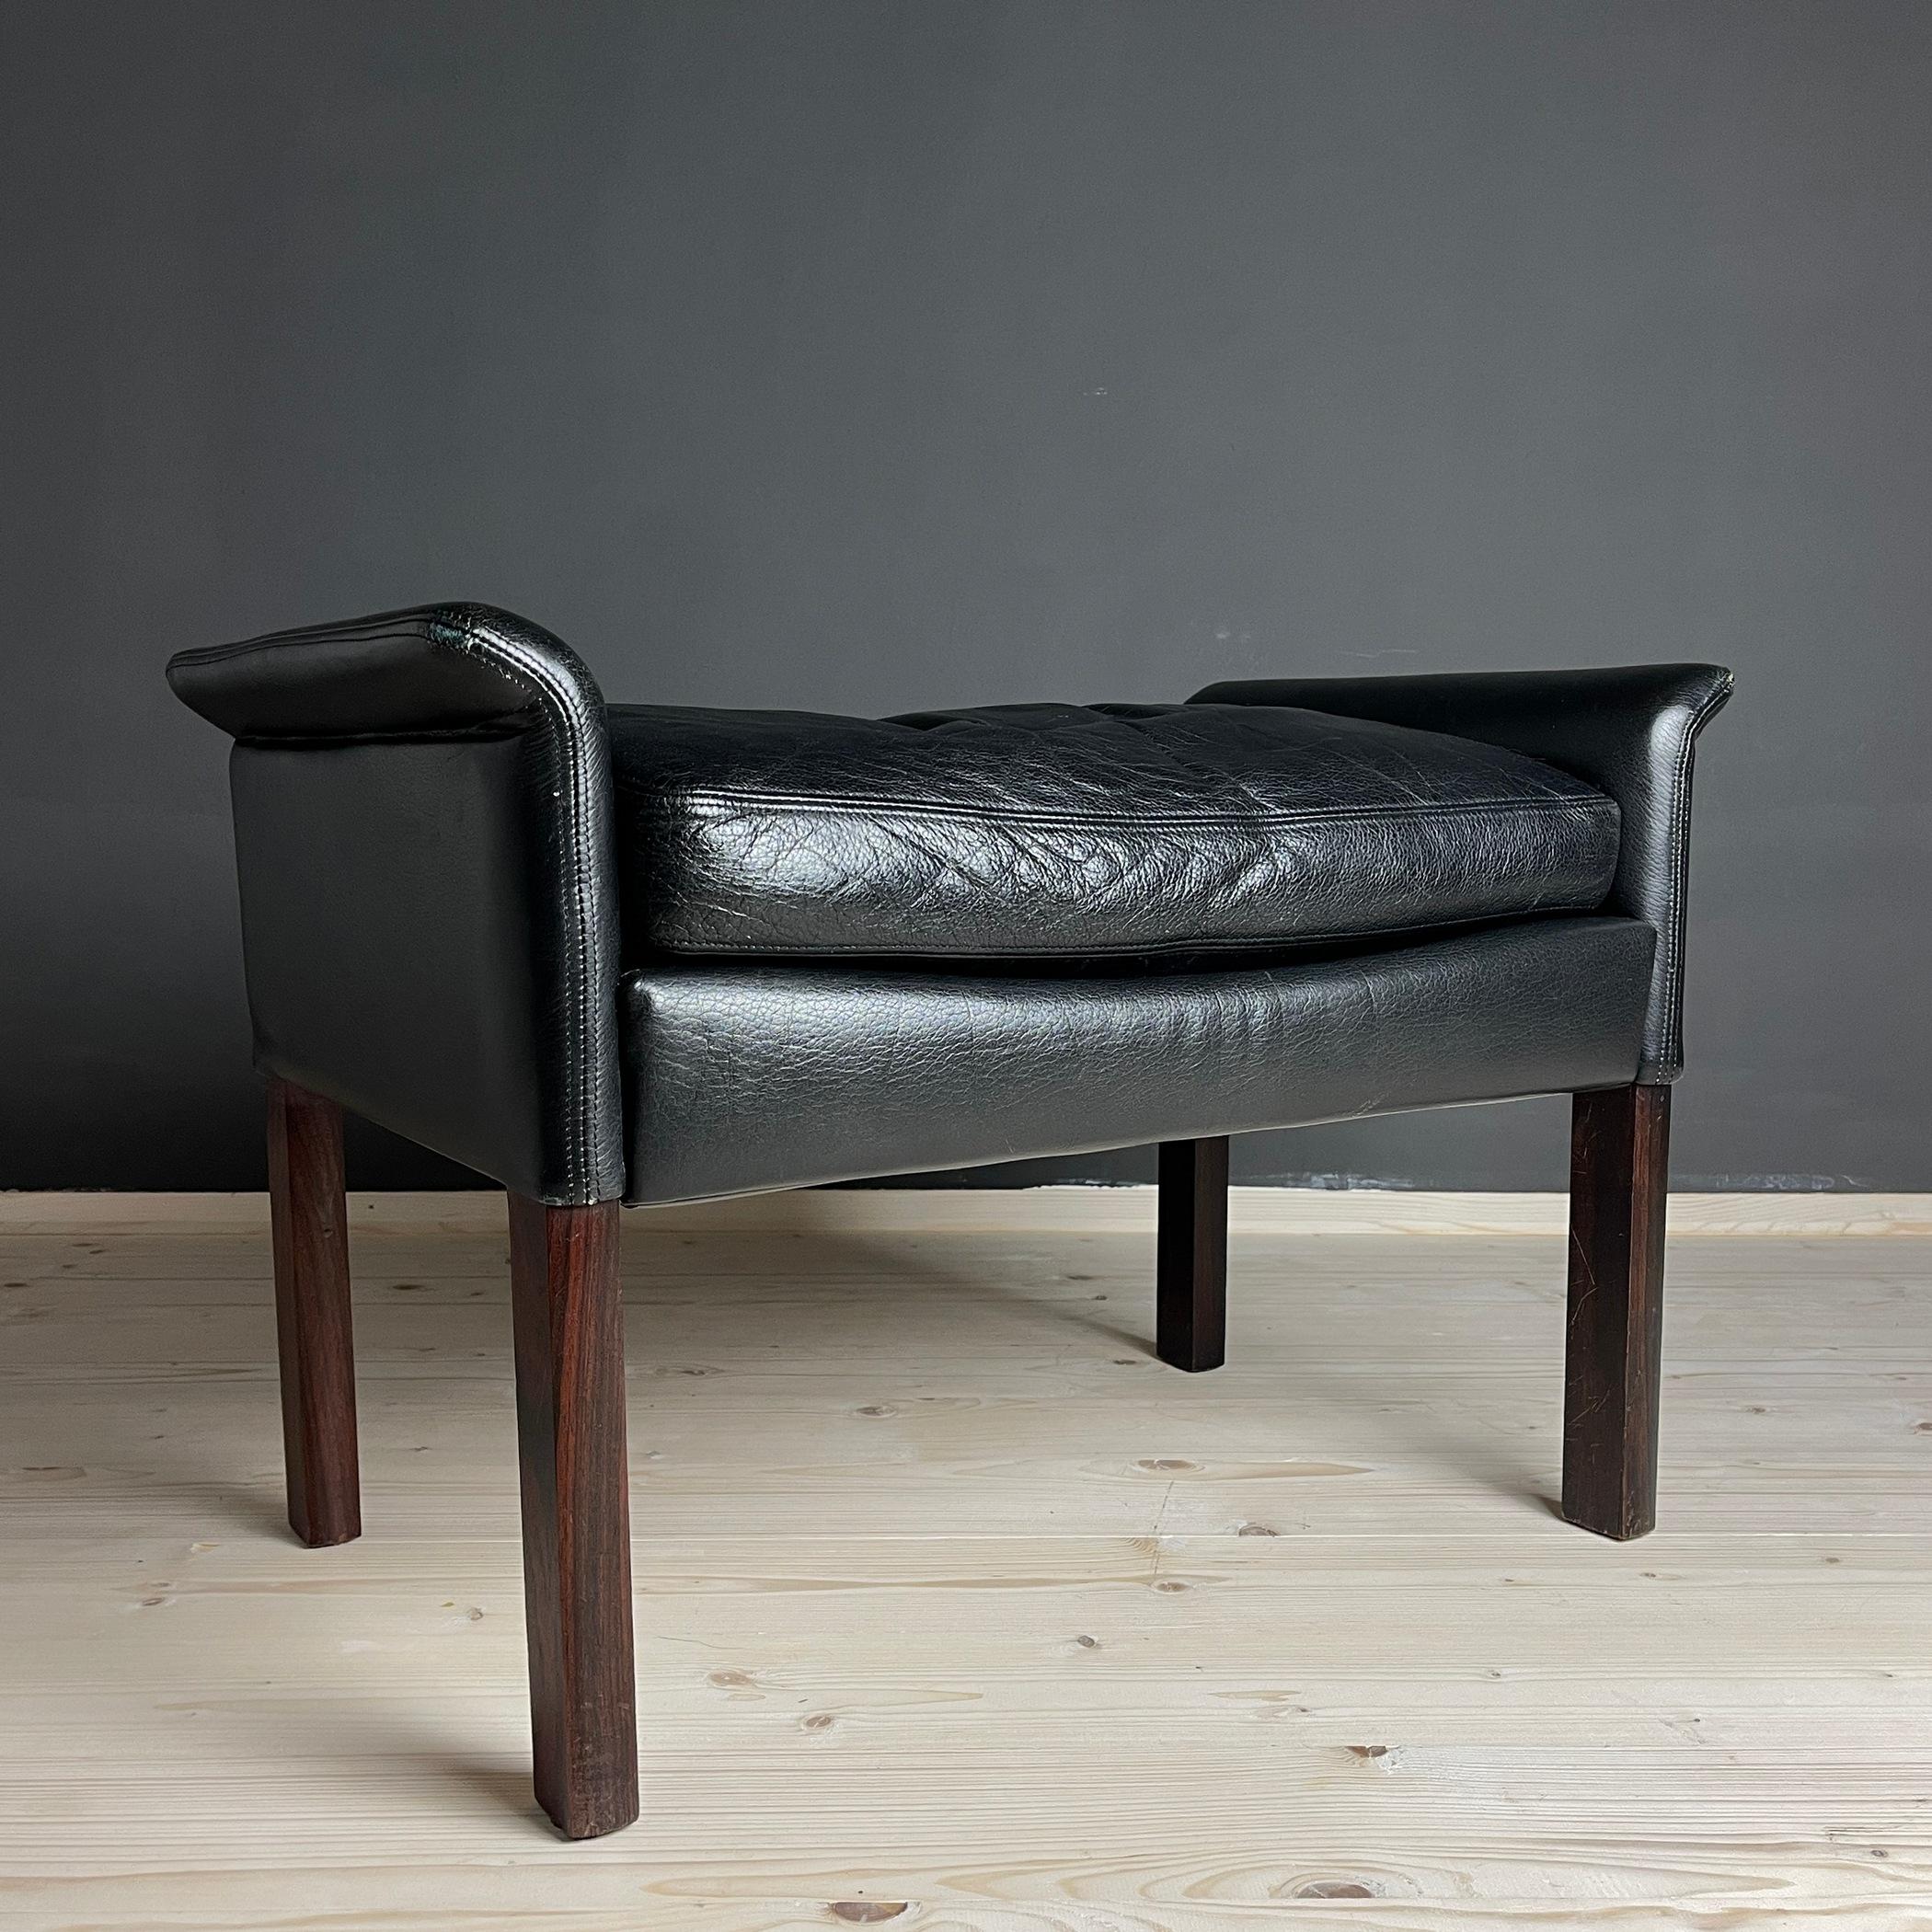 20th Century Hans Olsen Lounge Chair and Ottoman Mod. 500 for Vatne Møbler Denmark 1960s